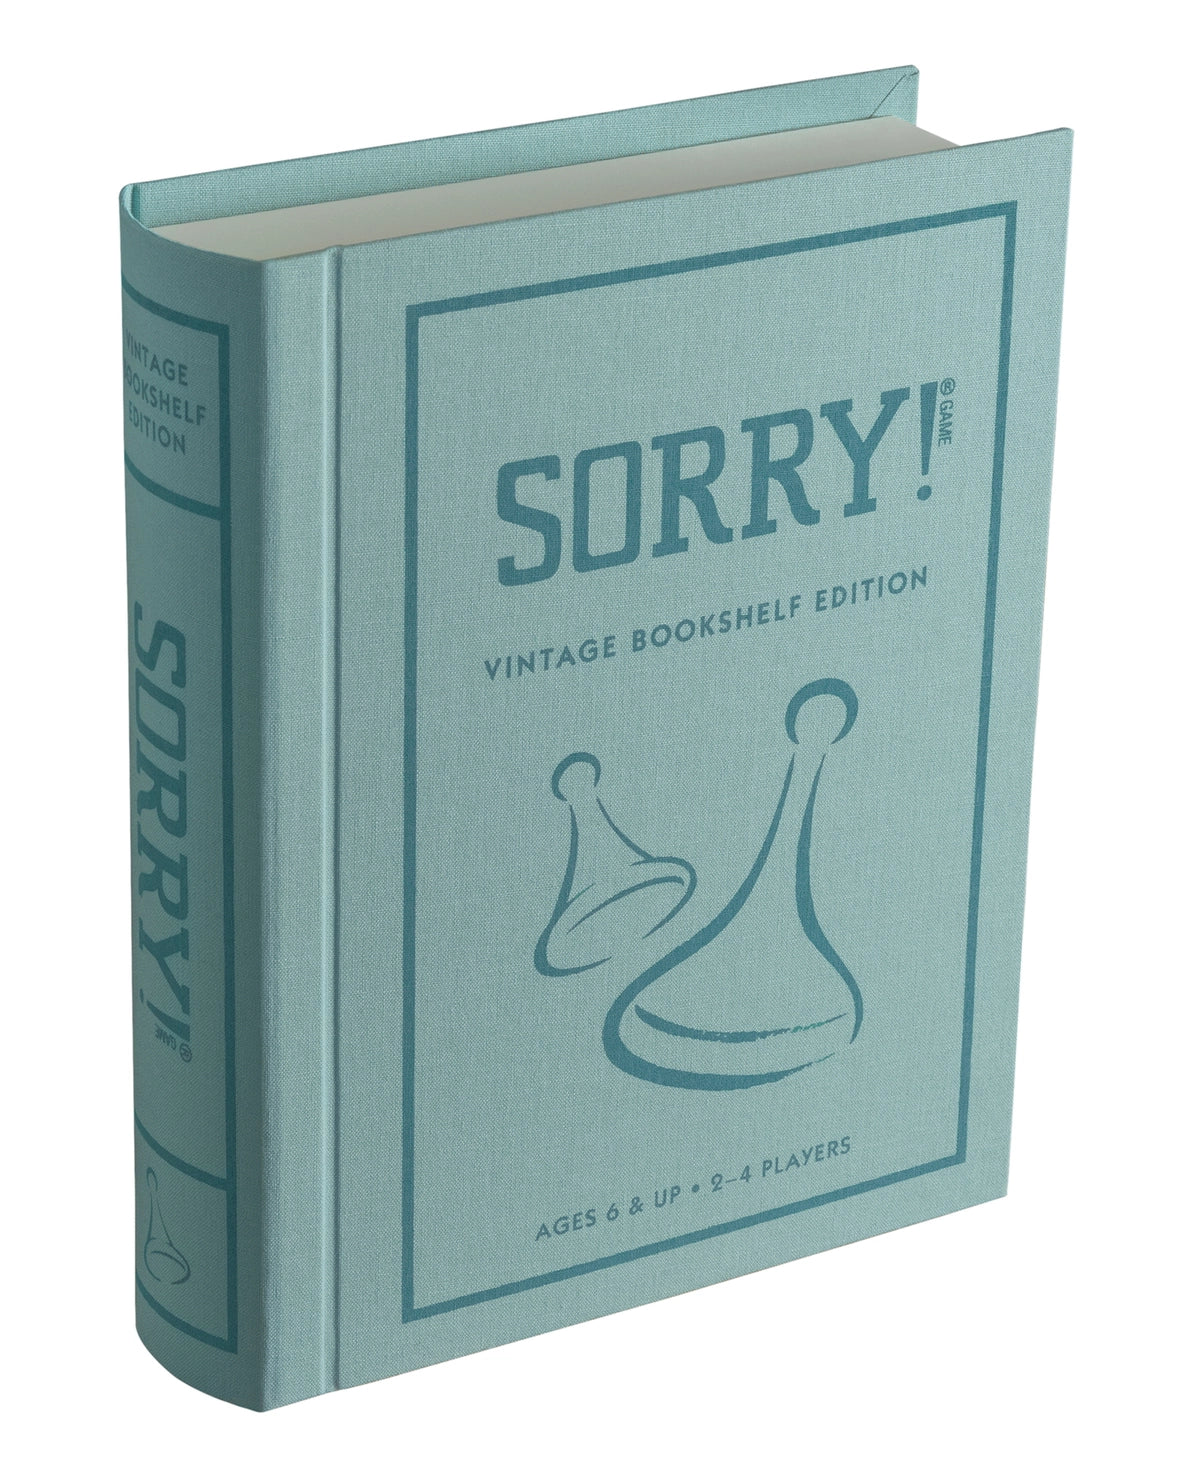 Sorry! Vintage Bookshelf Edition